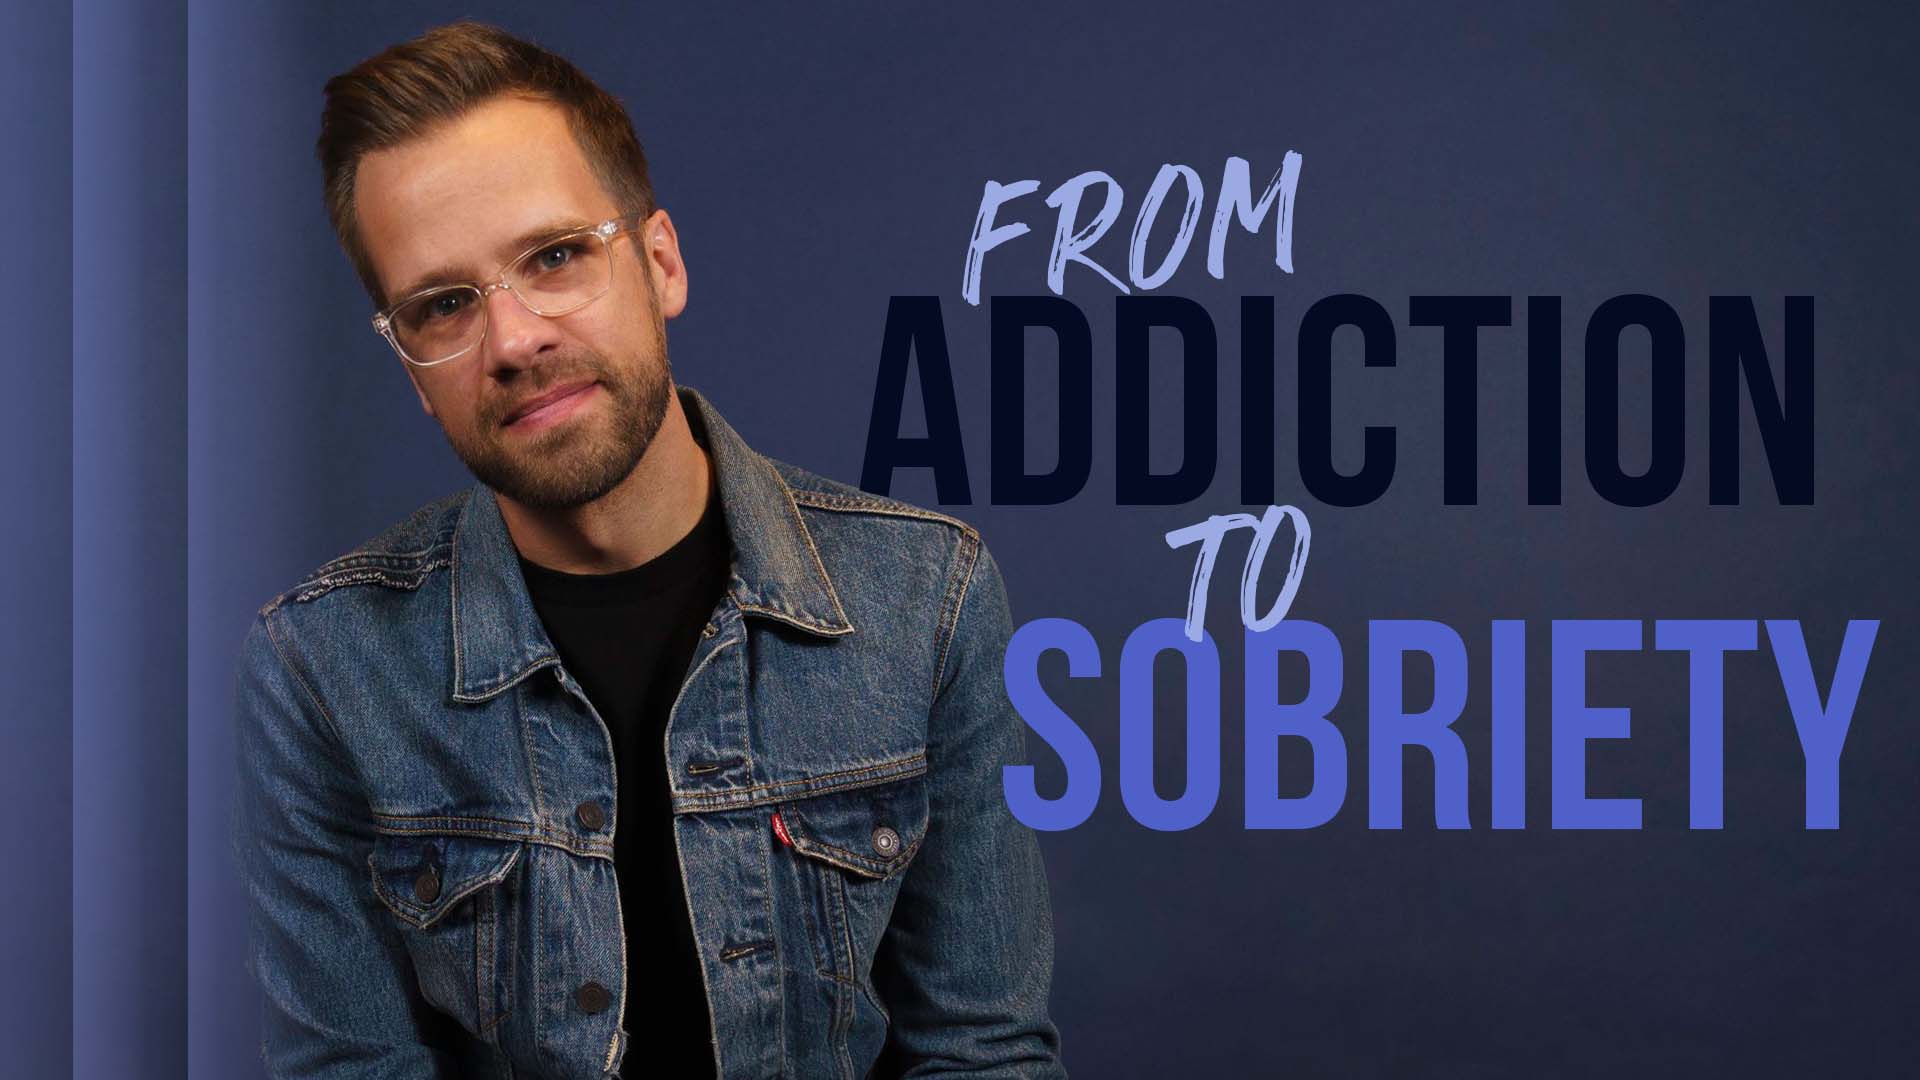 Josh Wilson | From Addiction to Sobriety